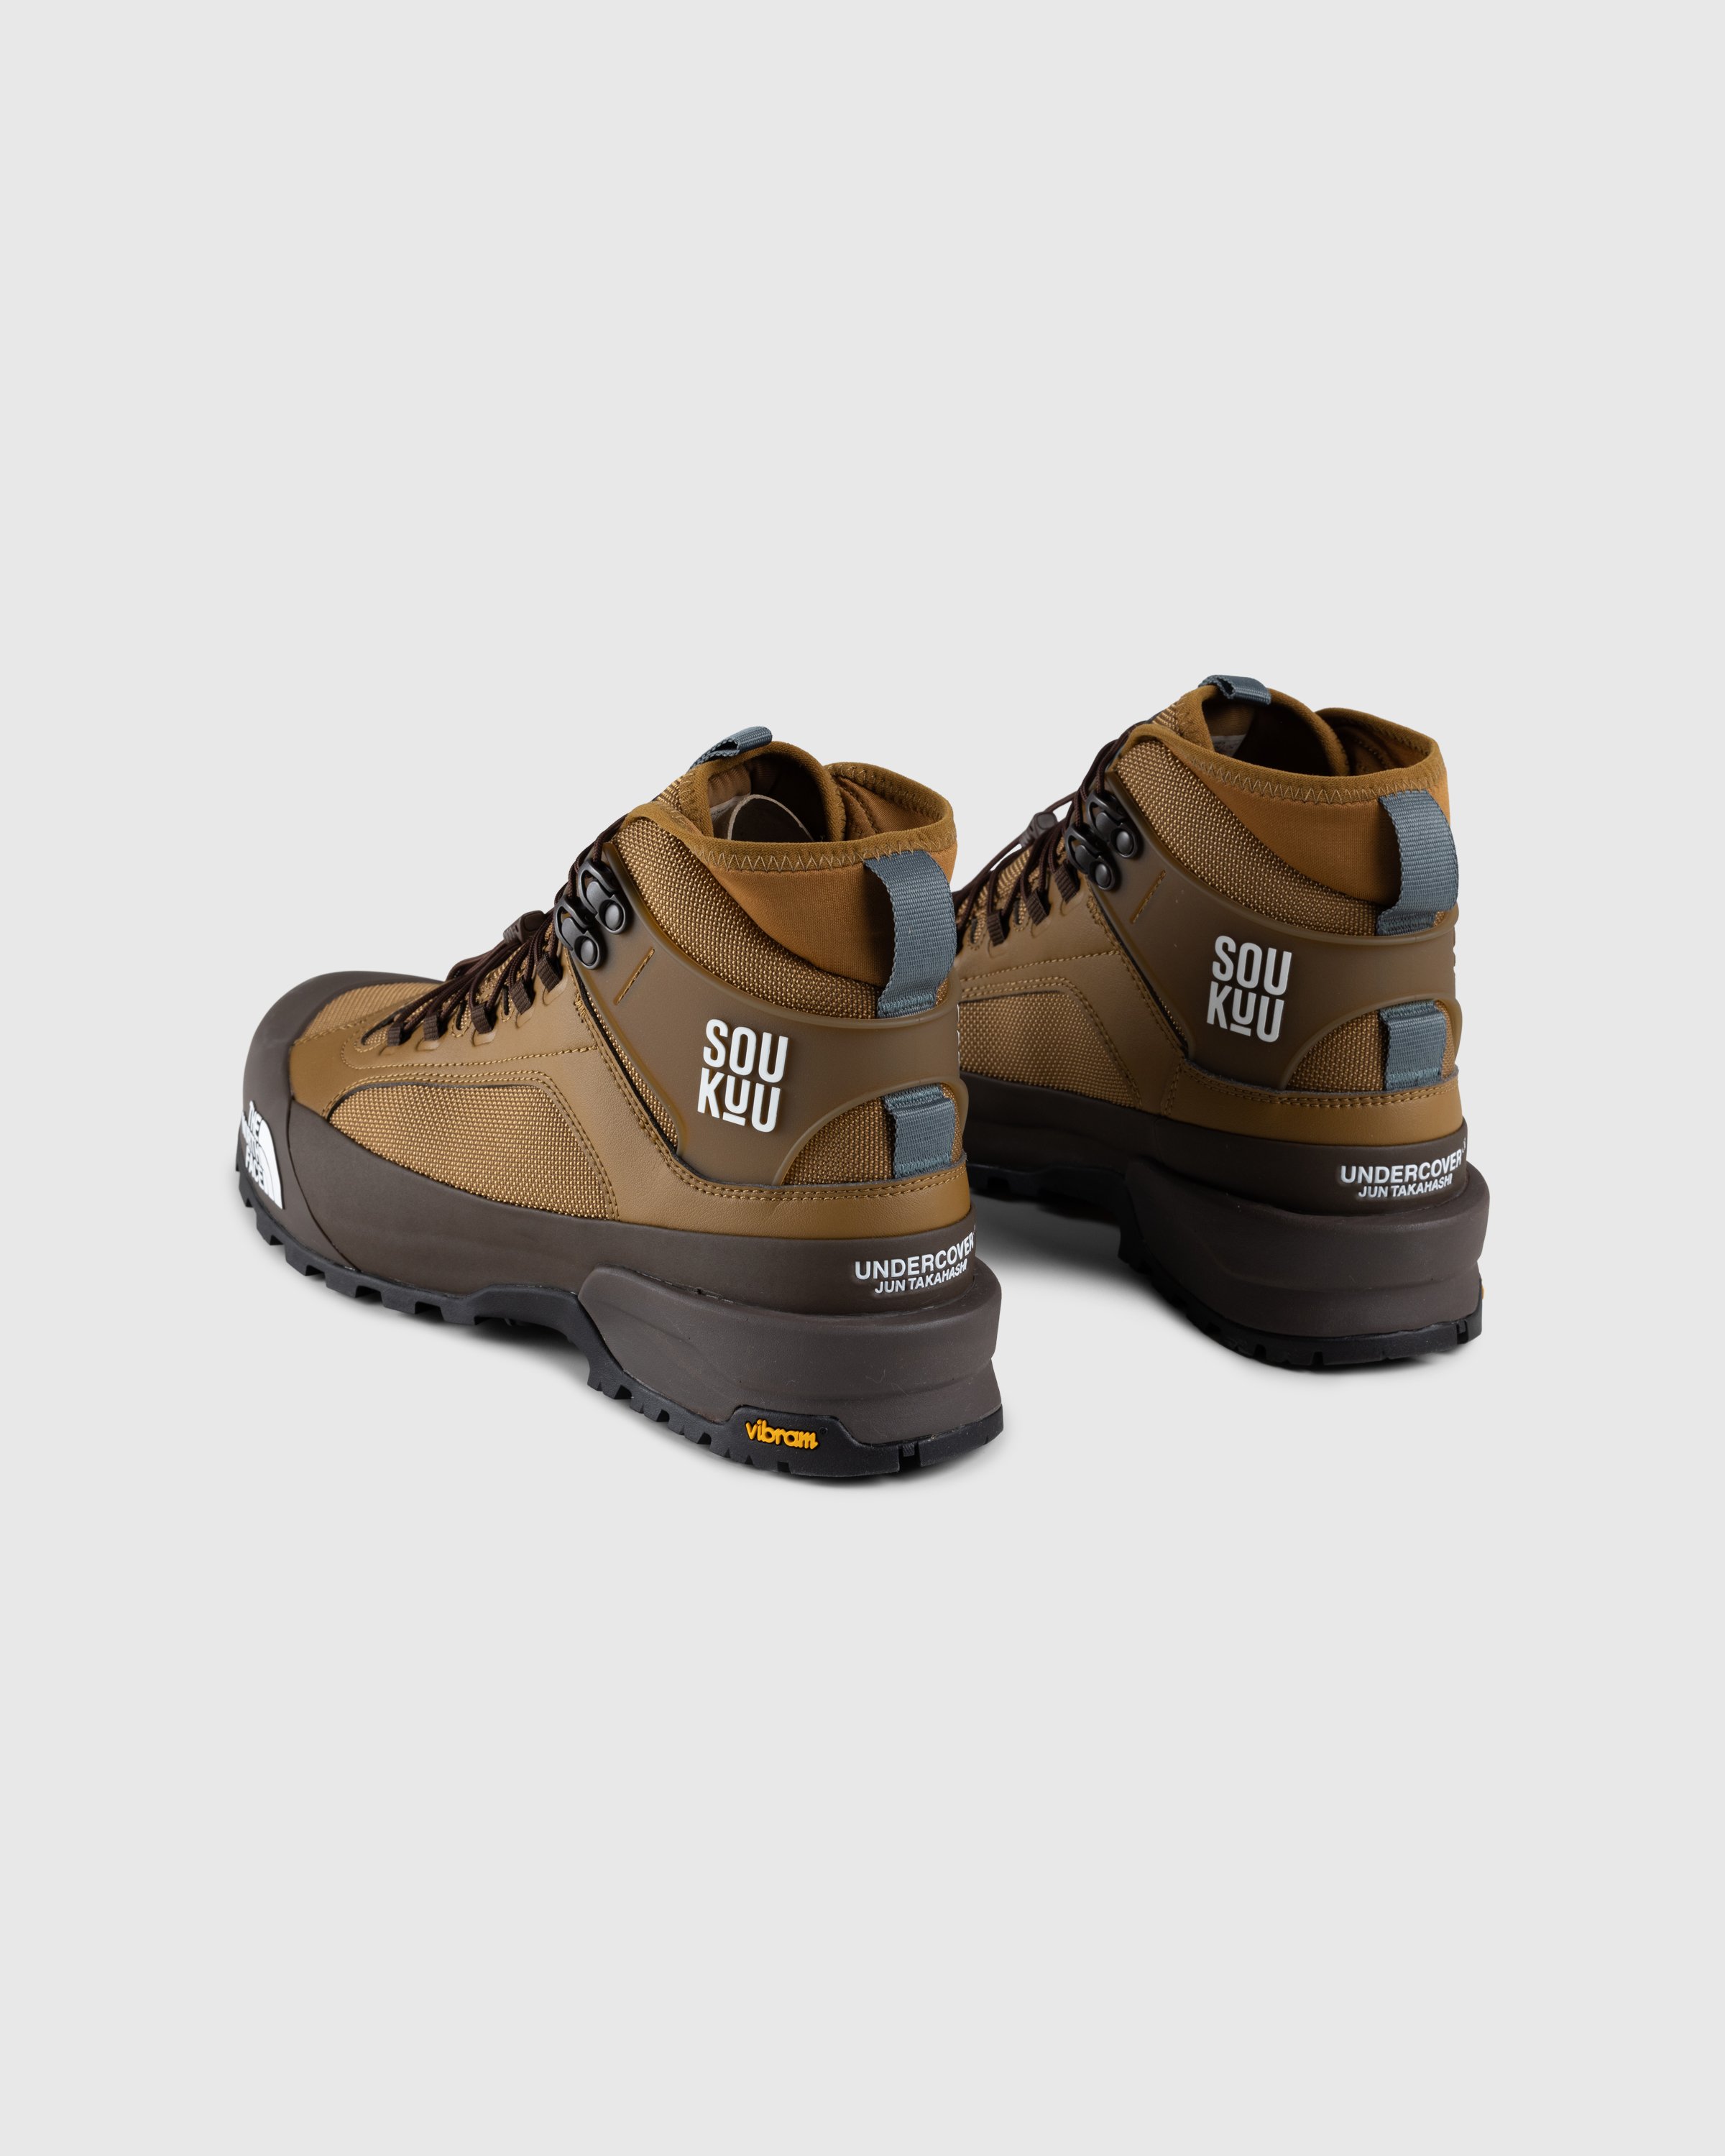 The North Face x UNDERCOVER - Soukuu Trail RAT Bronze Brown/Concrete Gray - Footwear - Multi - Image 4